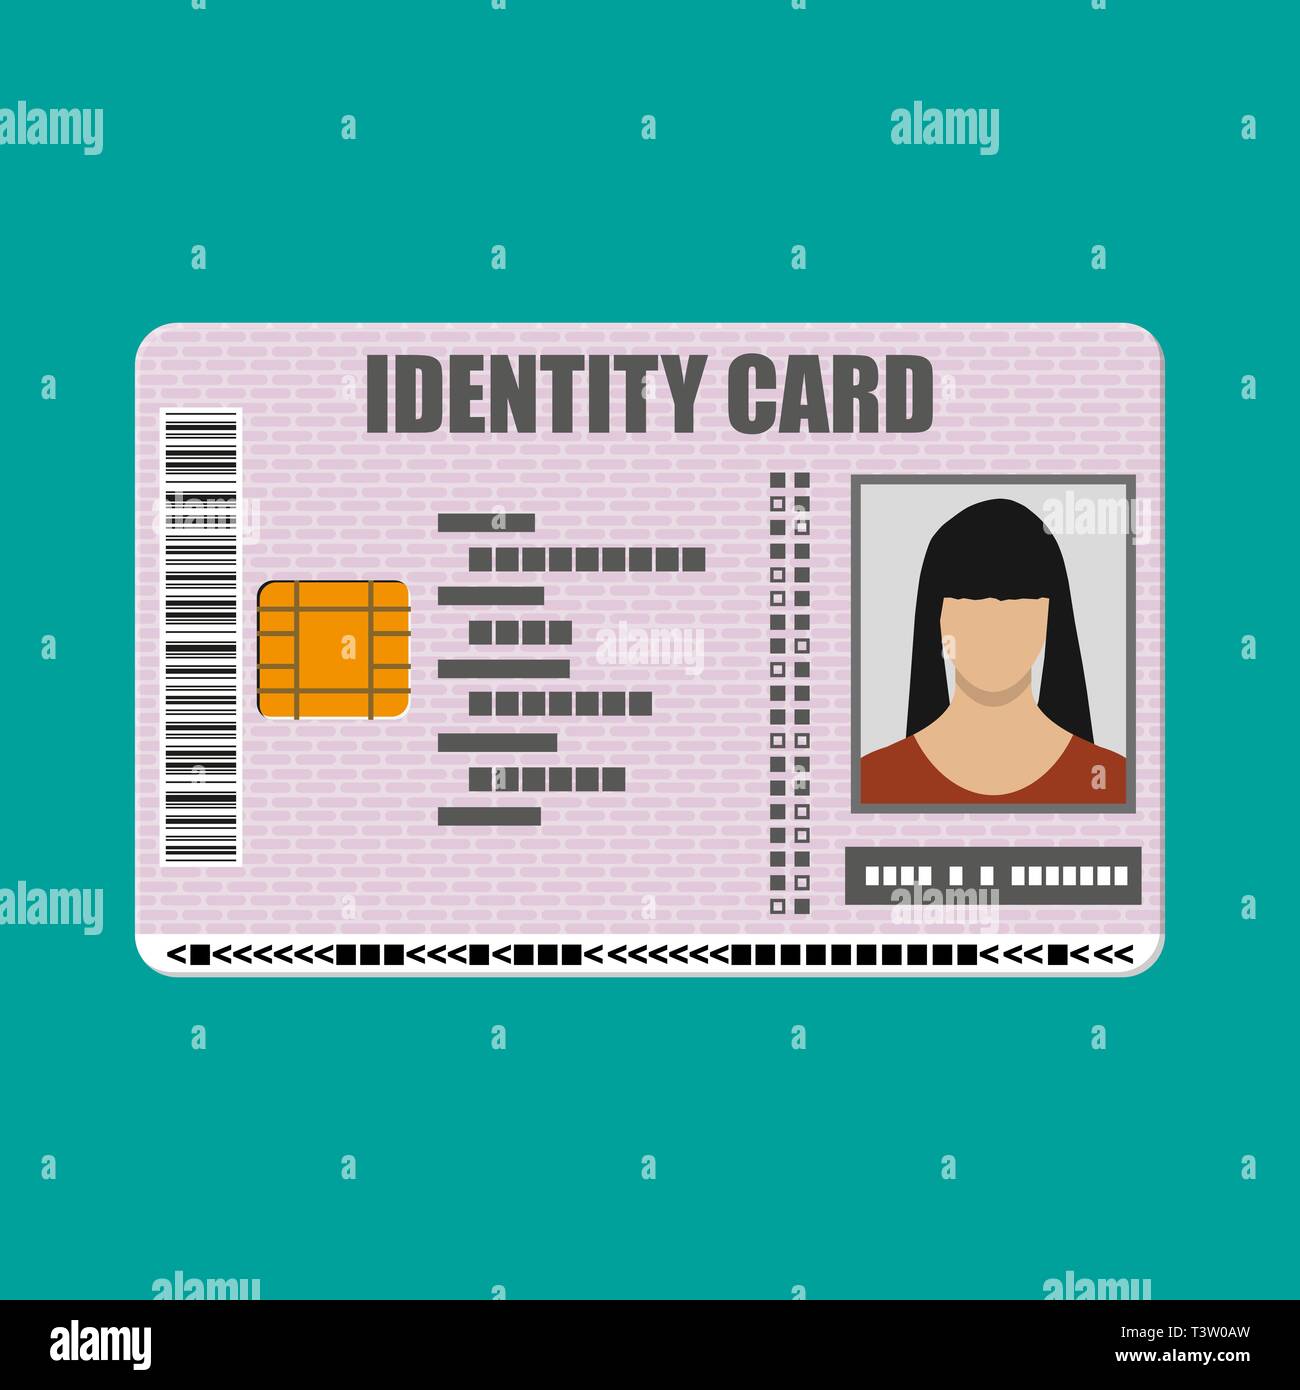 Bangladesh fake id card